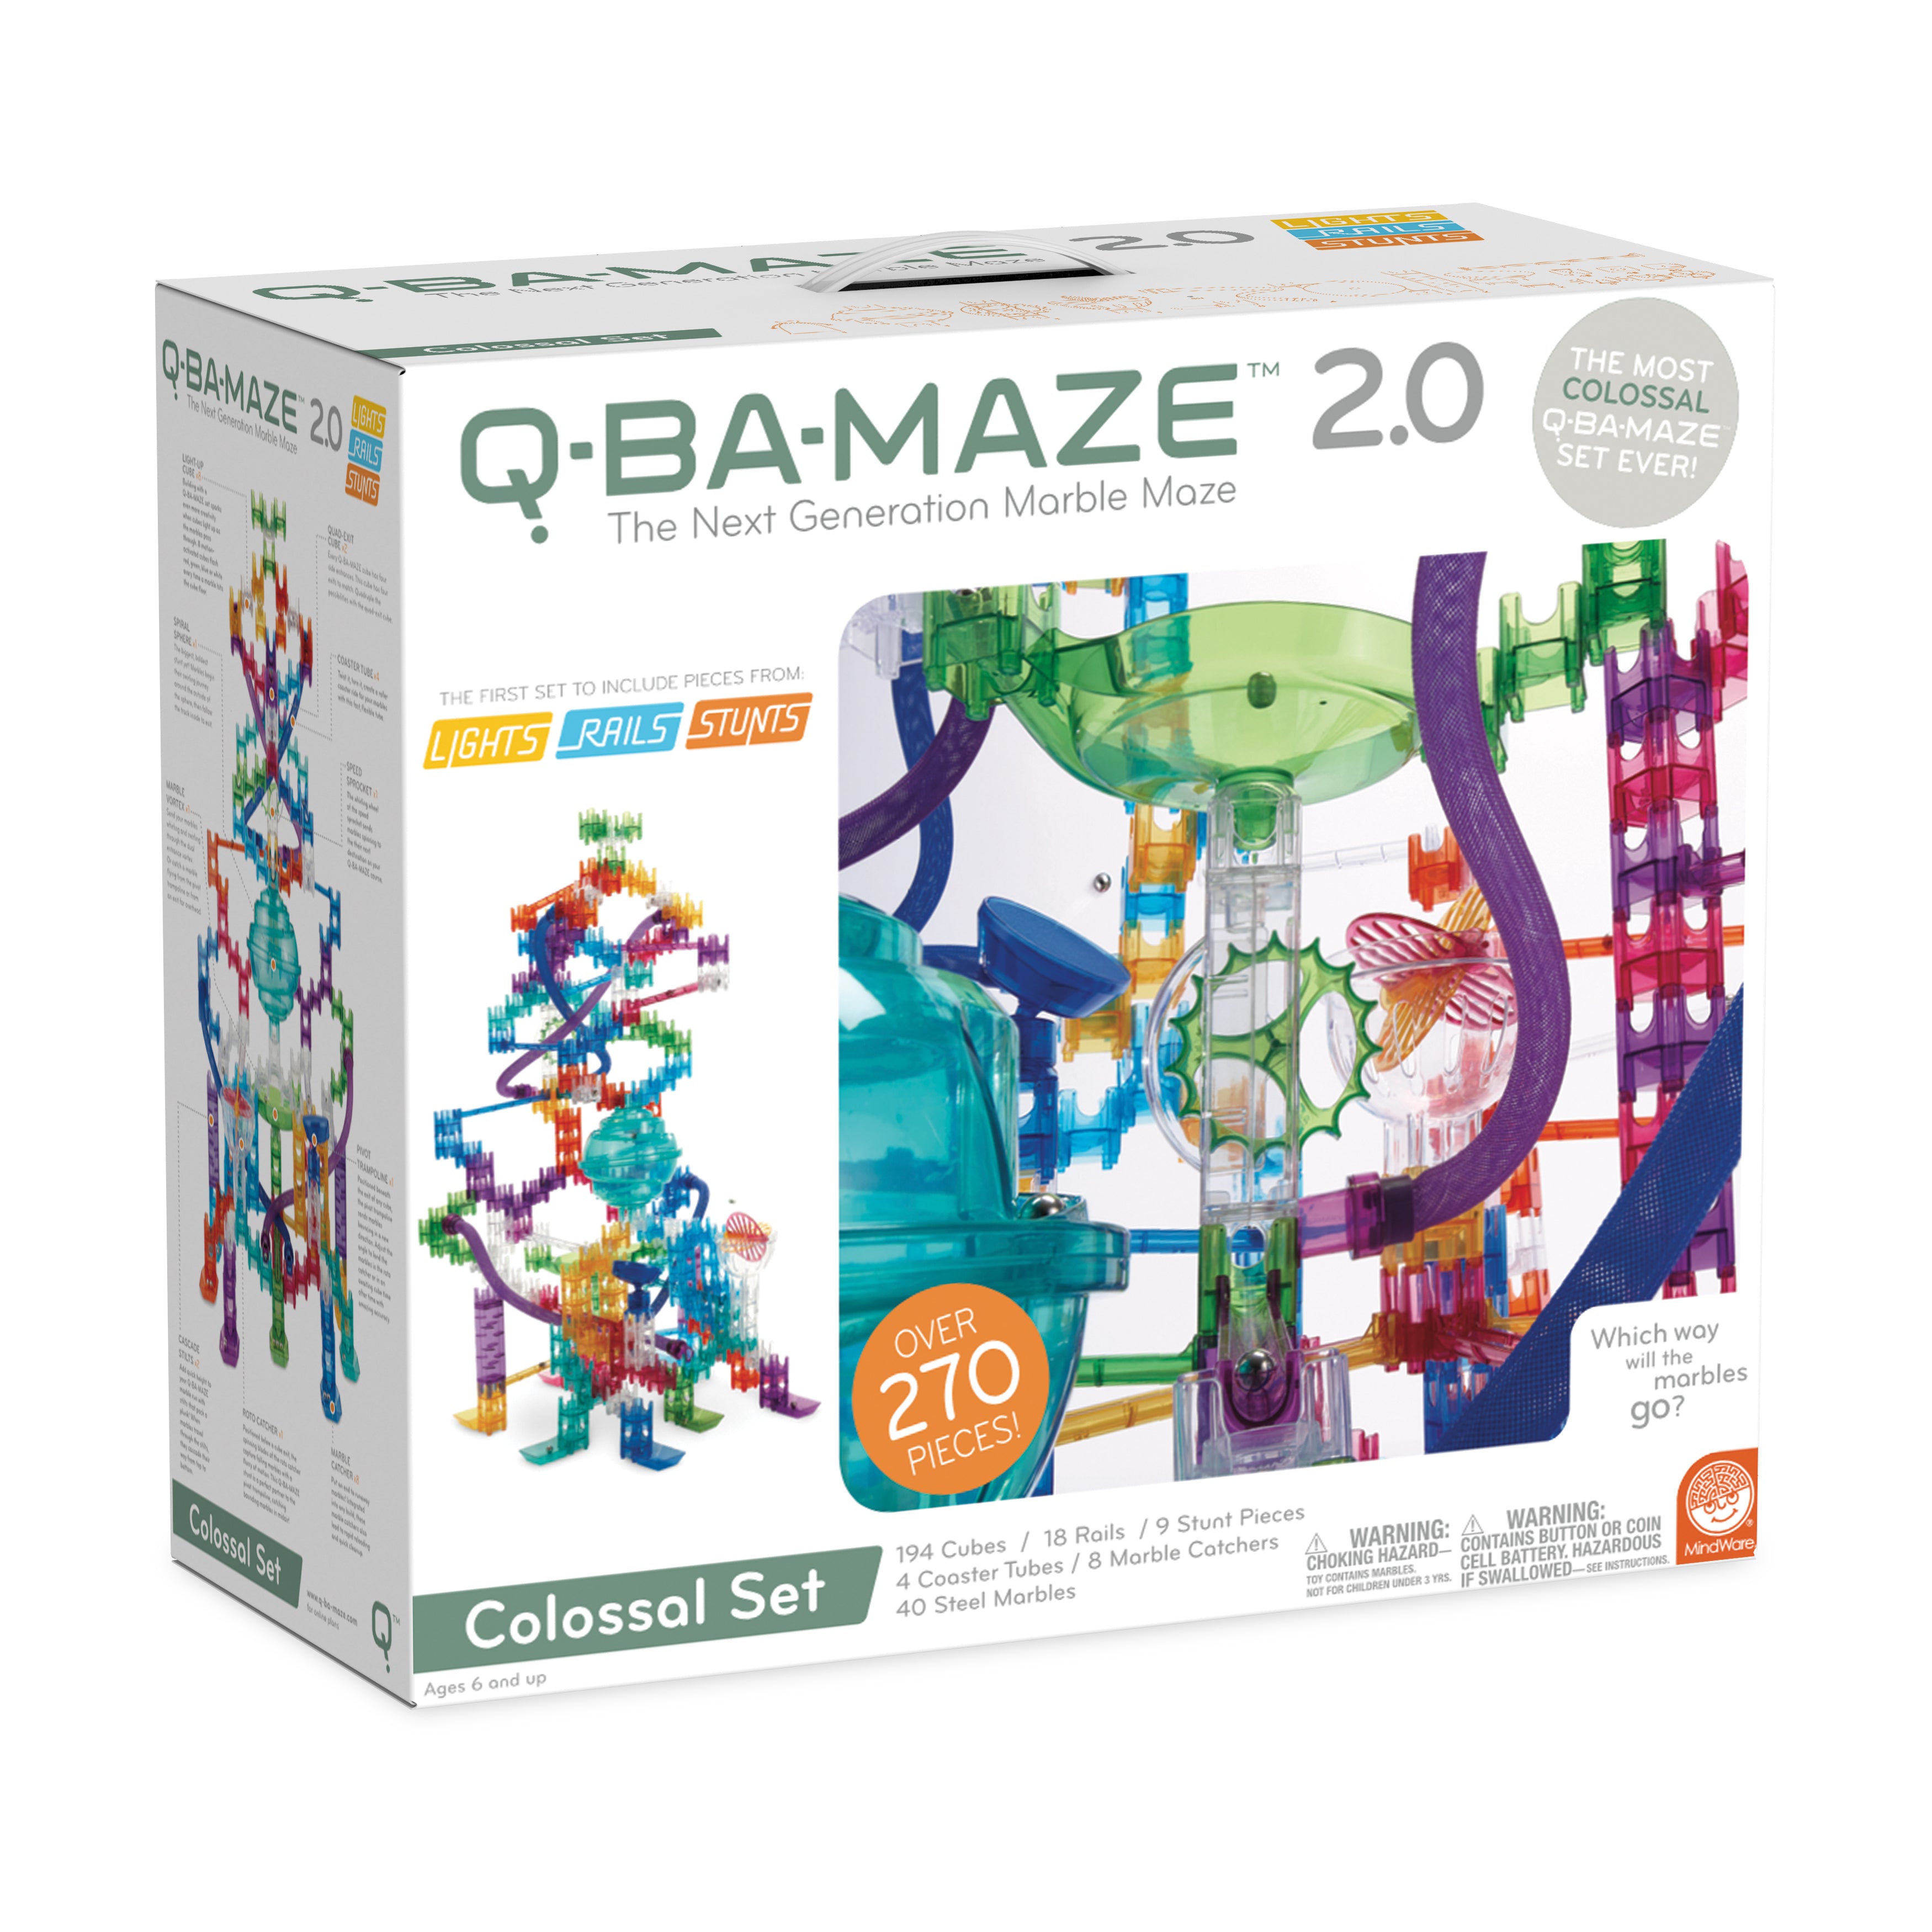 Q-BA-MAZE 2.0 Colossal Set